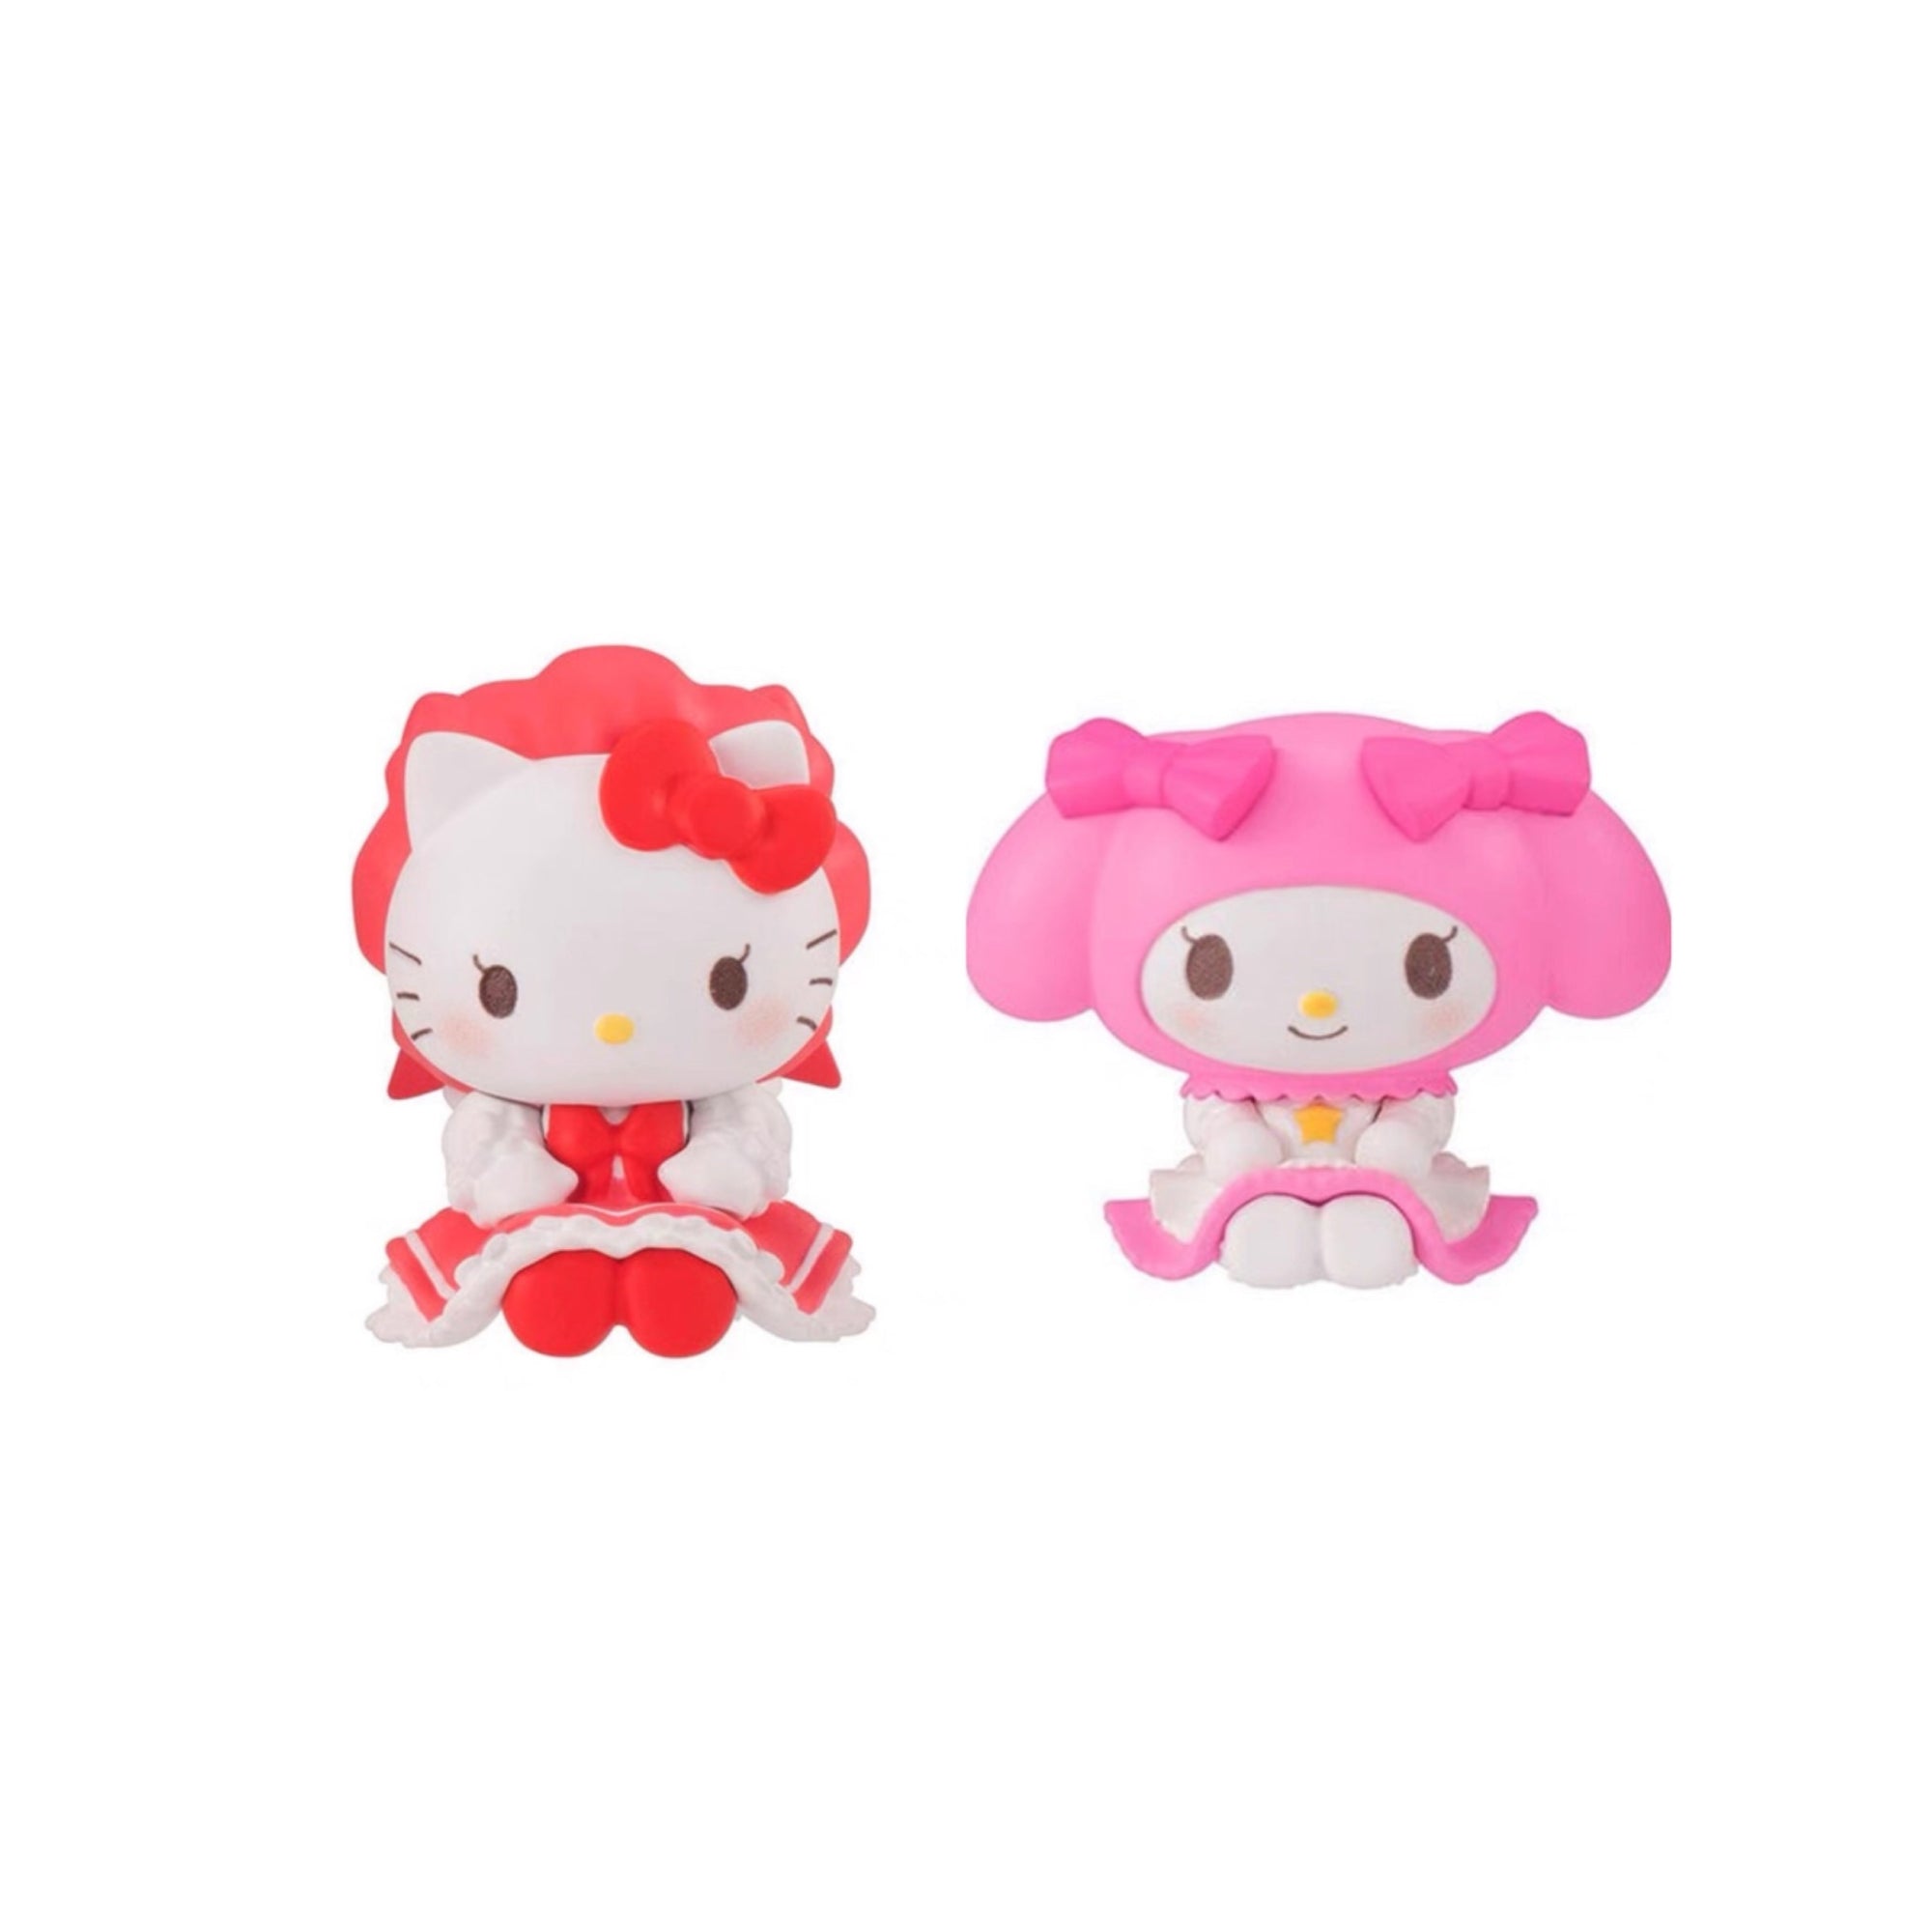 Hello Kitty & My Melody Gachapon Set of 2 - Card Captor Sakura x Sanrio [Bandai Capsule Toy] - 1